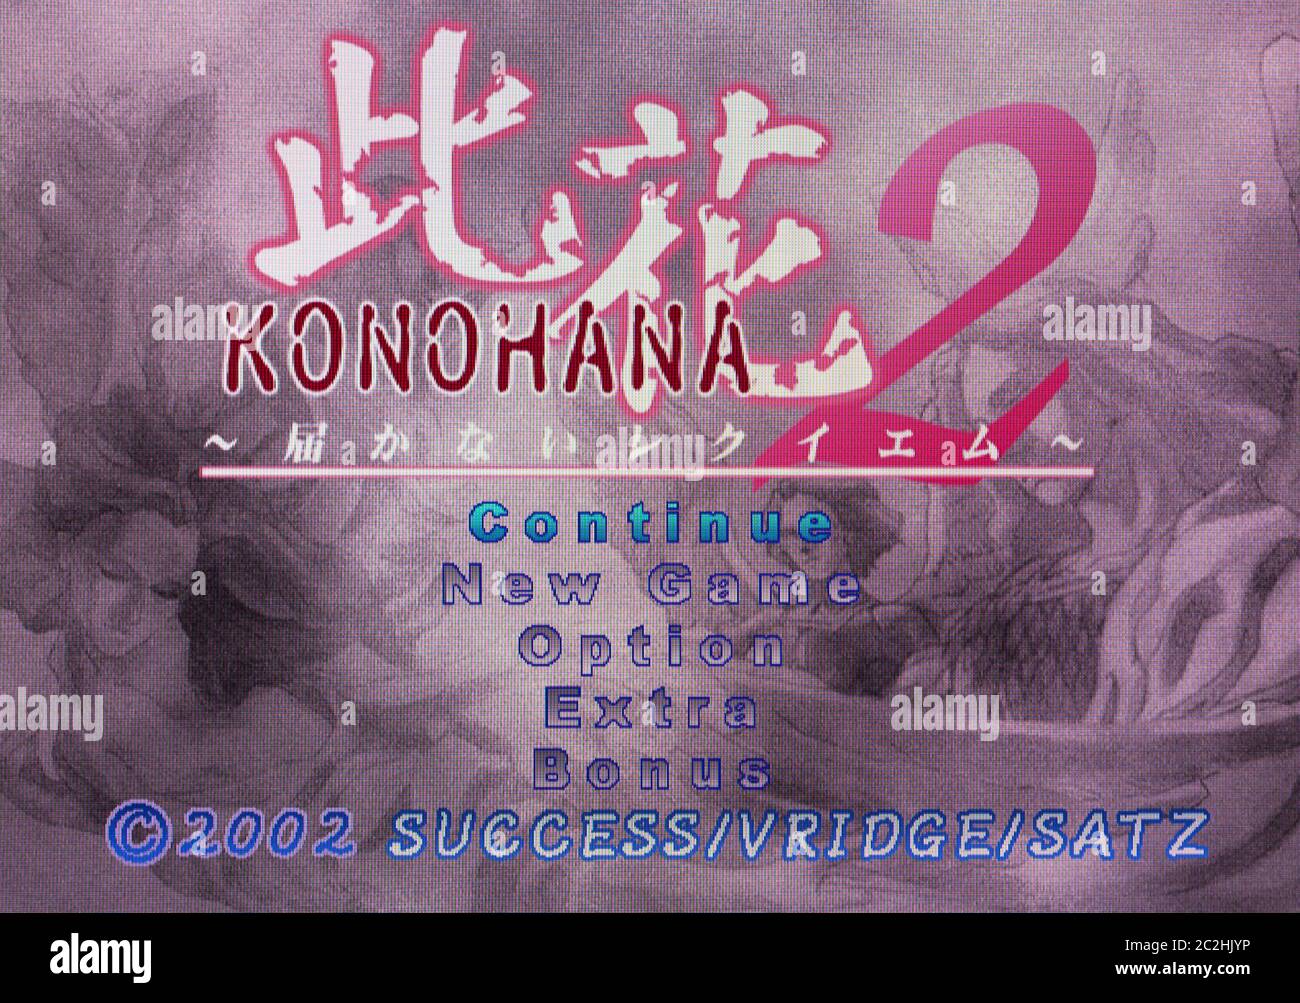 Konohana 2 Todokanai Requiem - Sega Dreamcast Videogame - Editorial use only Stock Photo